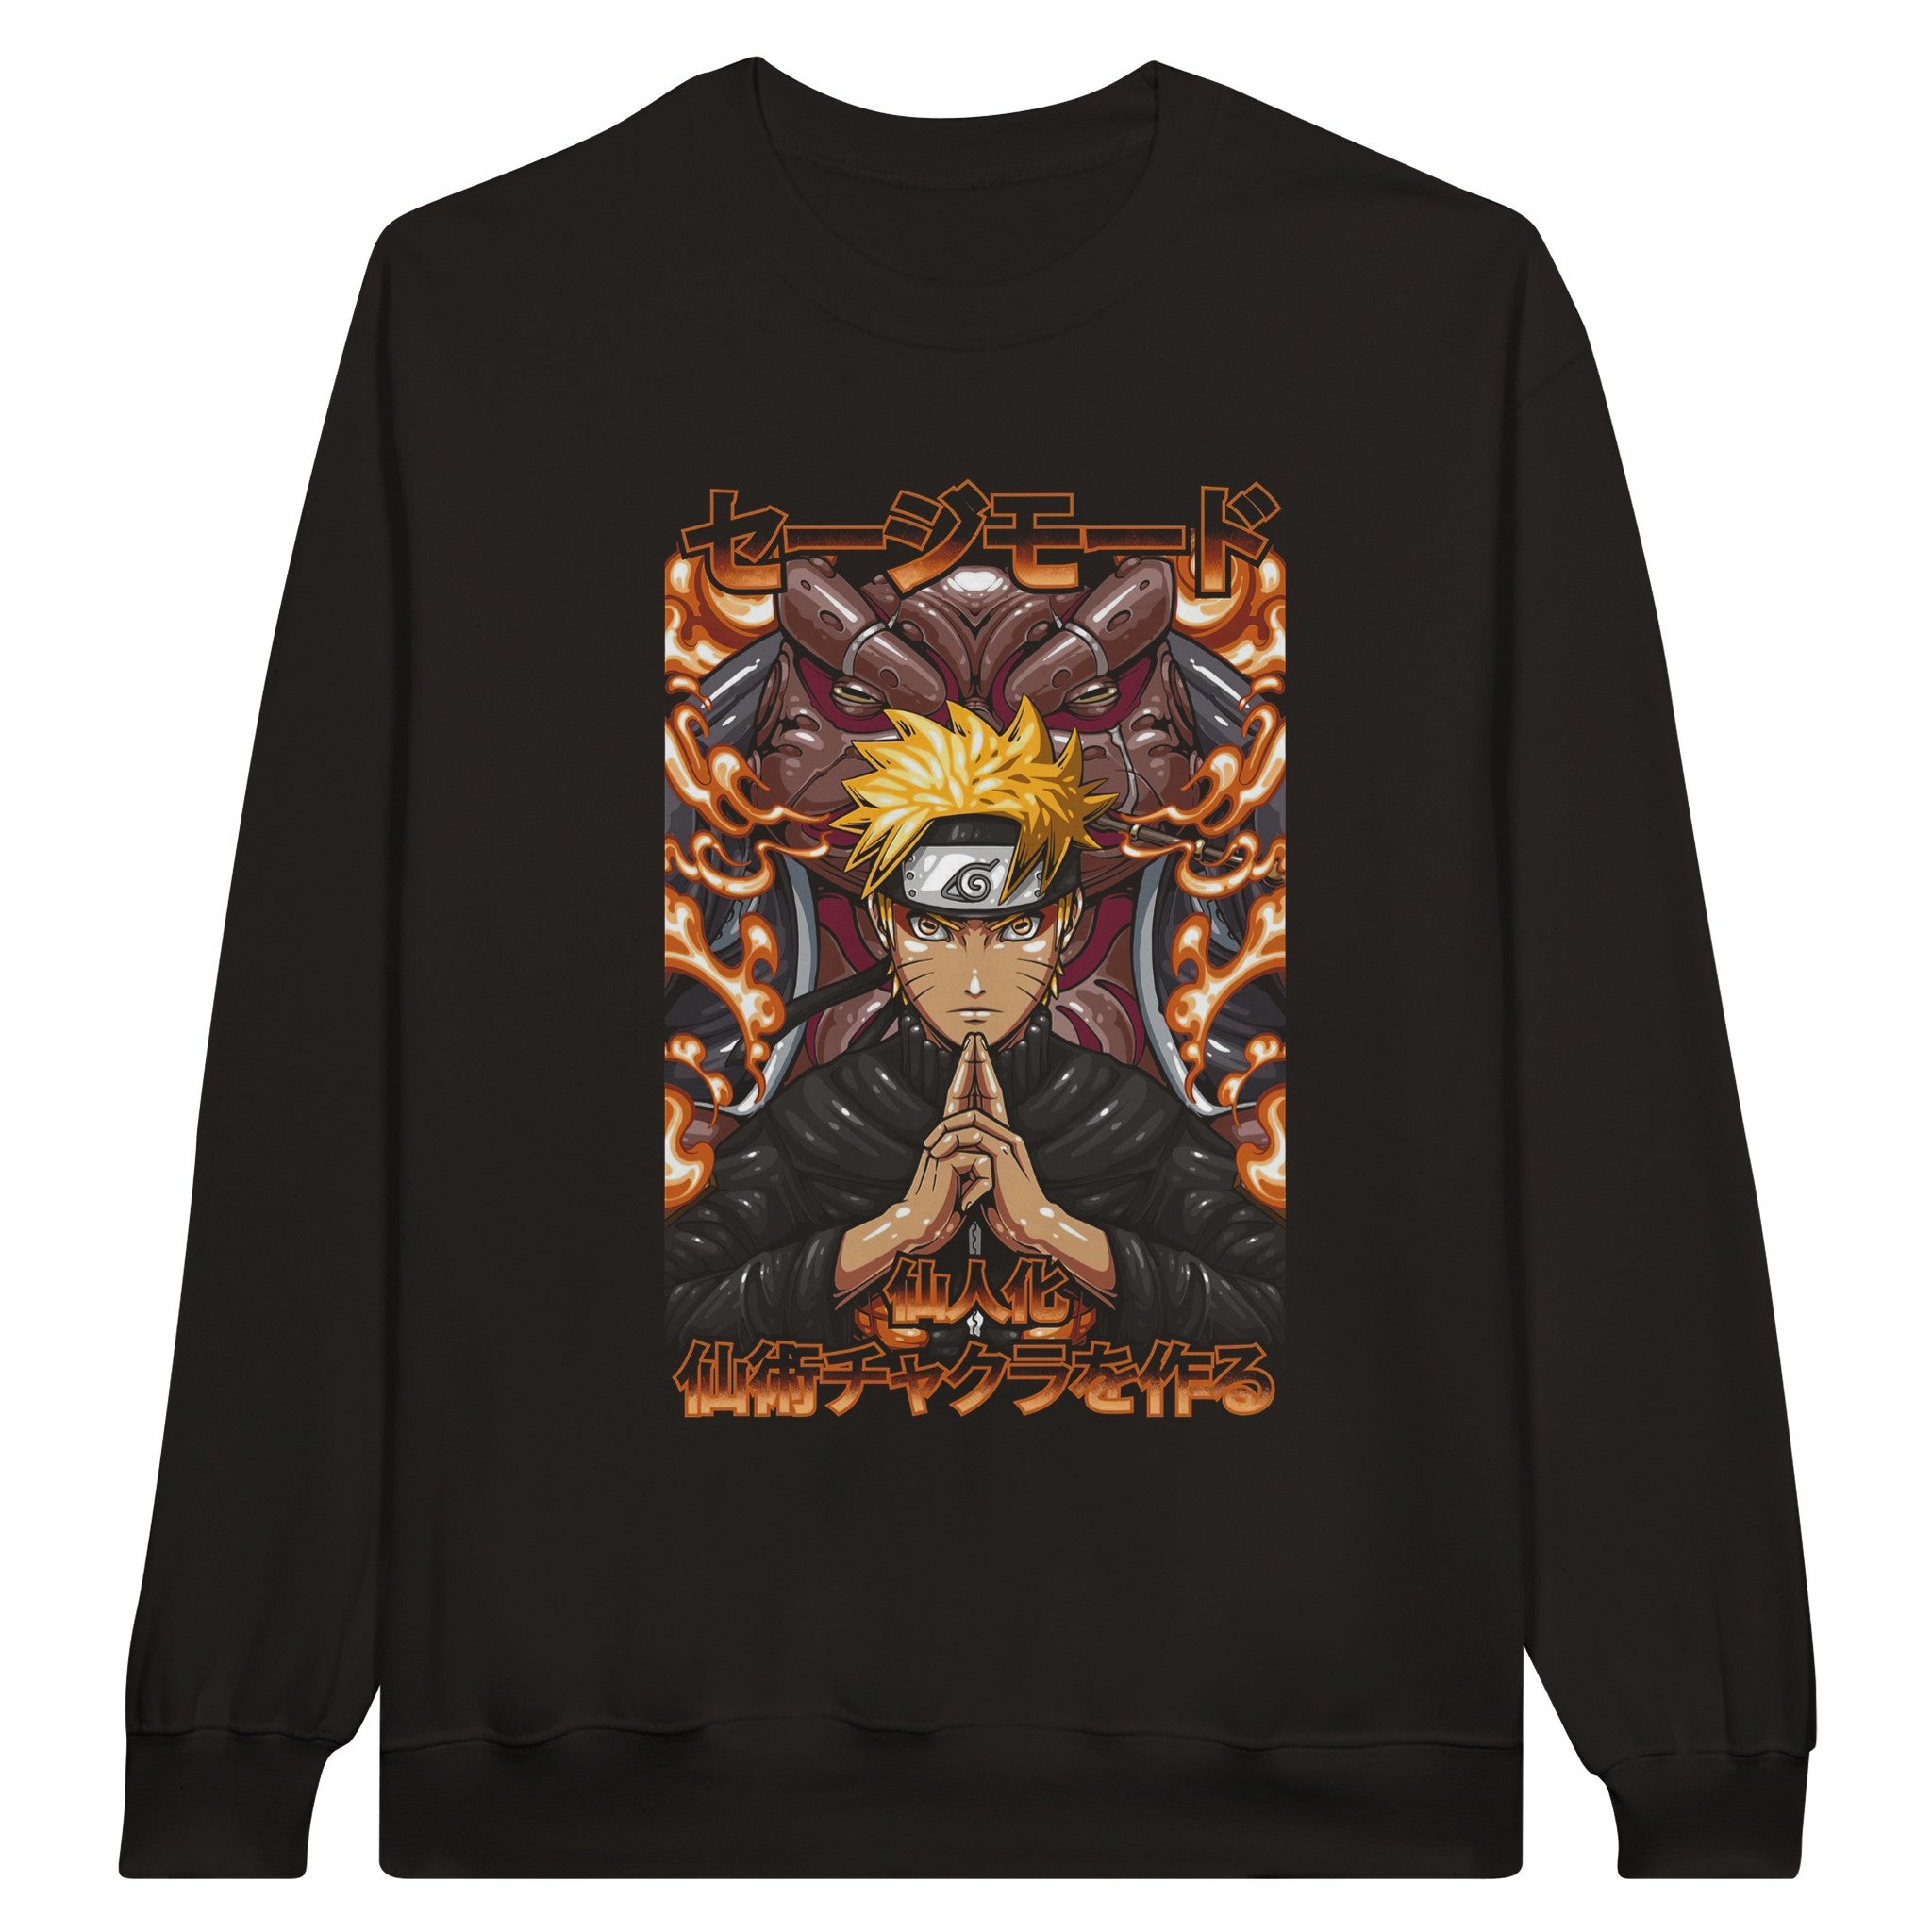 shop and buy naruto anime clothing sweatshirt